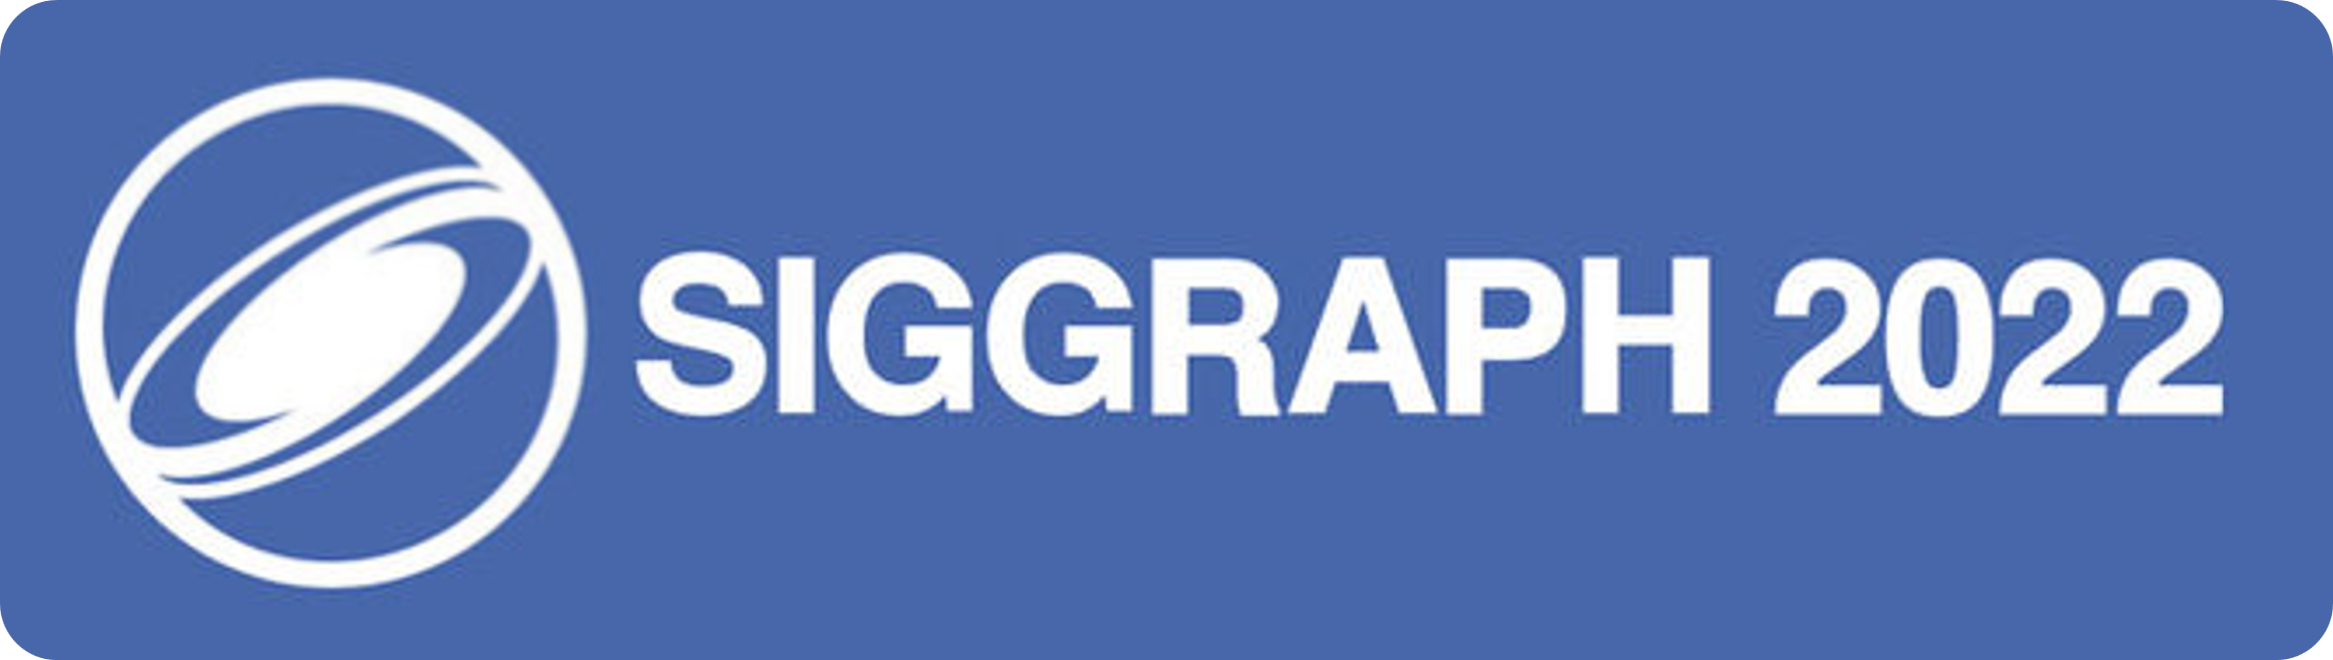 SIGGRAPH 2022 Logo